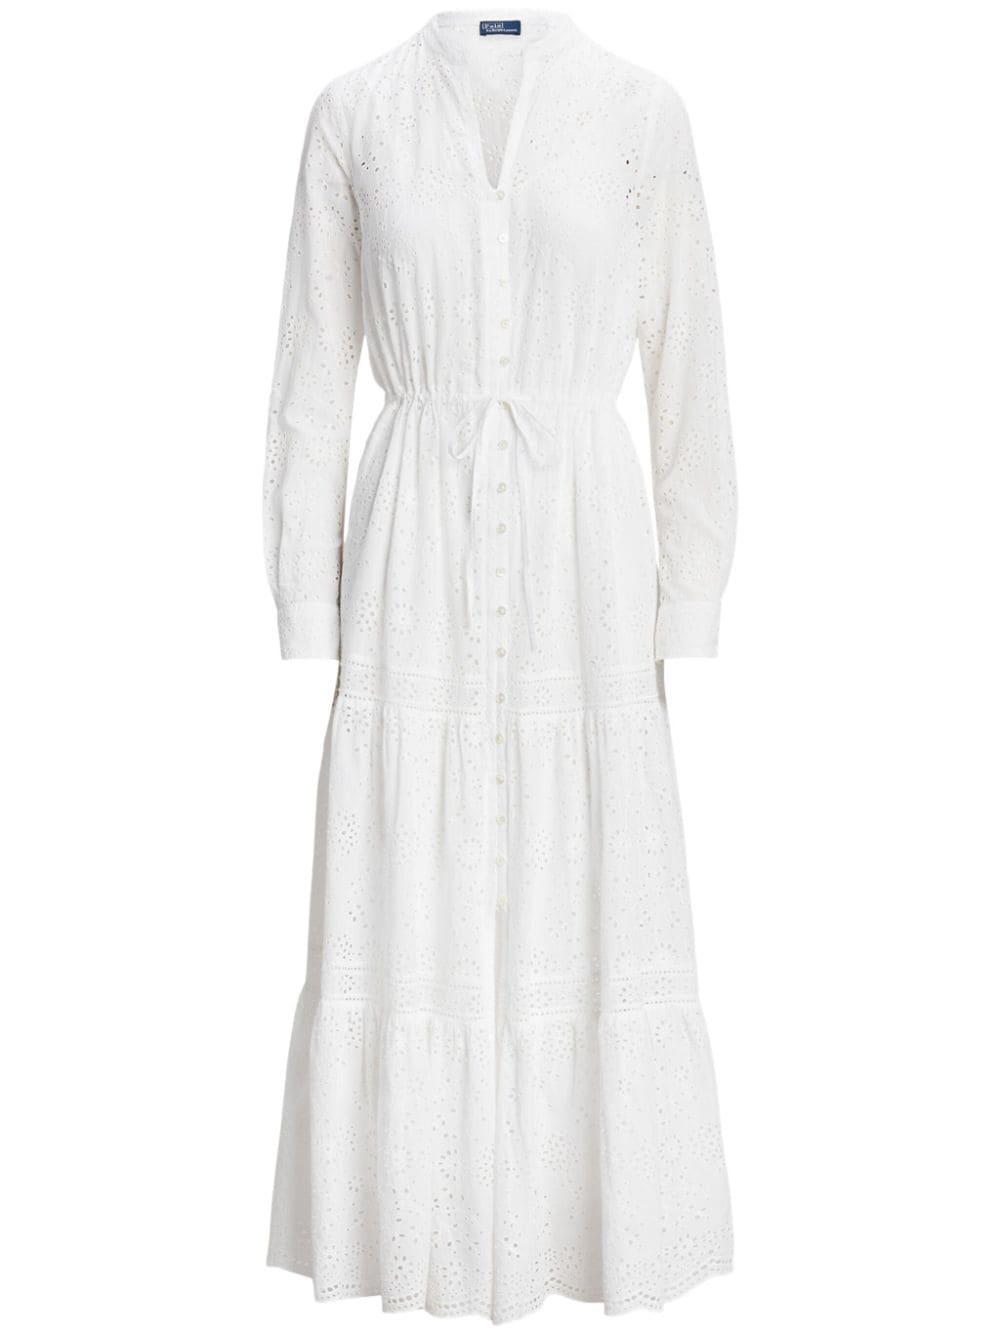 Polo Ralph Lauren eyelet cotton maxi dress - White von Polo Ralph Lauren